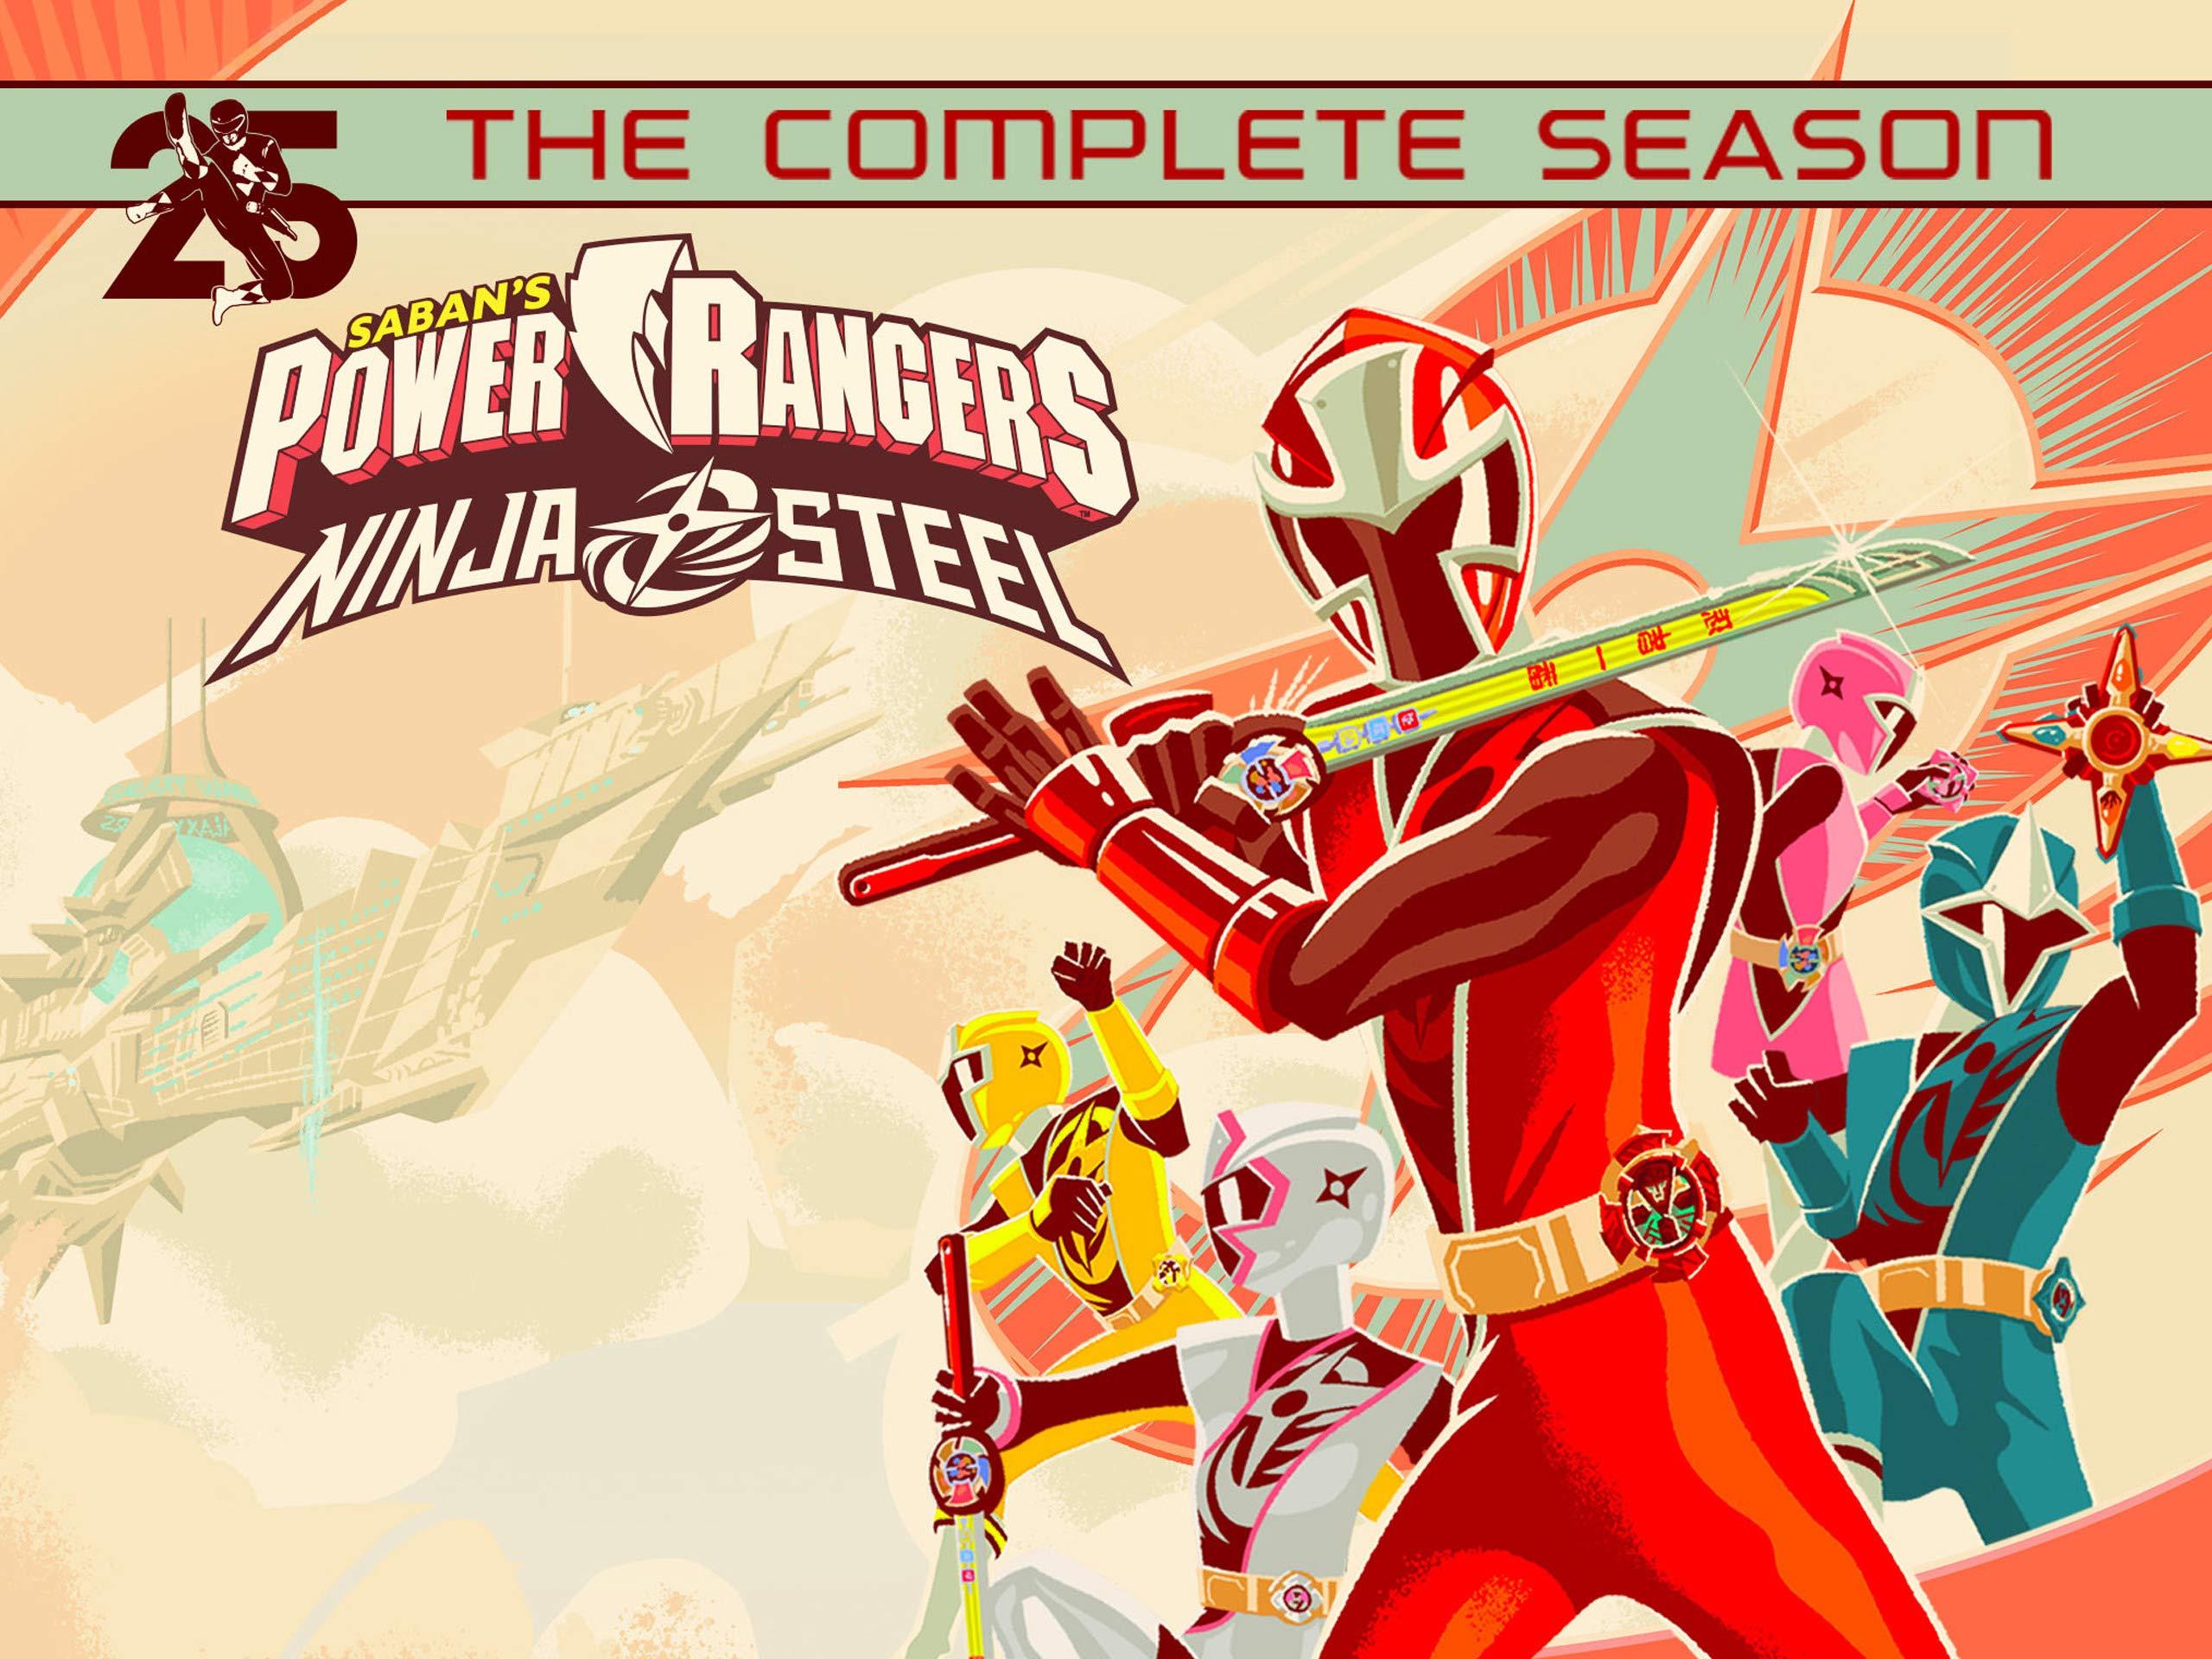 Watch Power Rangers Ninja Steel: The Complete Season. Prime